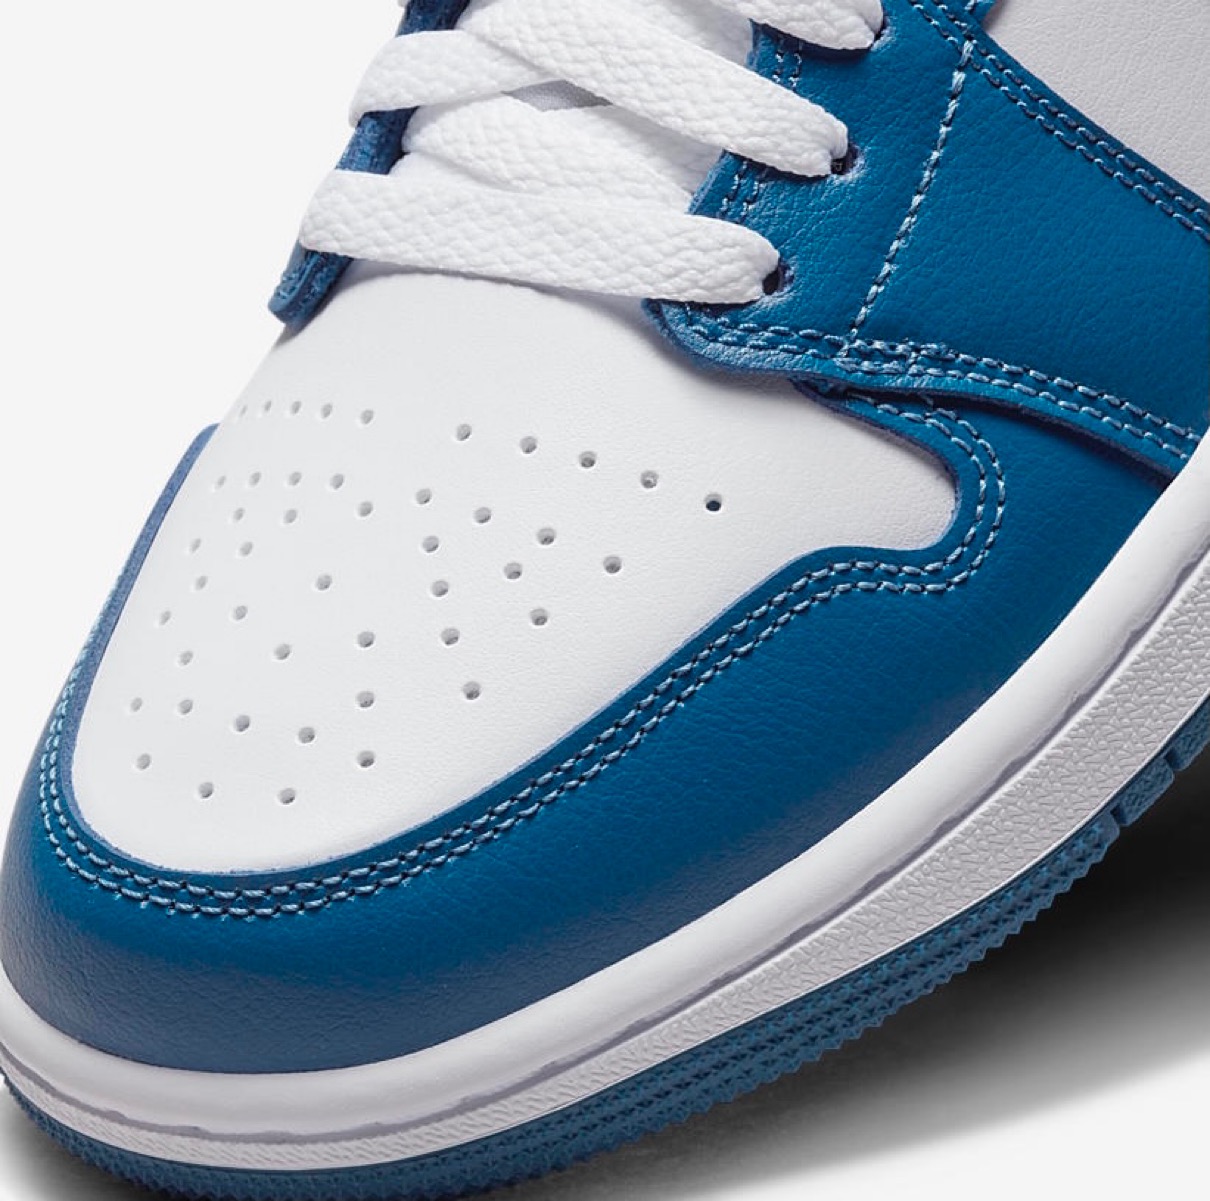 Nike Wmns Air Jordan 1 Low “Dark Marina Blue”が国内順次発売中 | UP